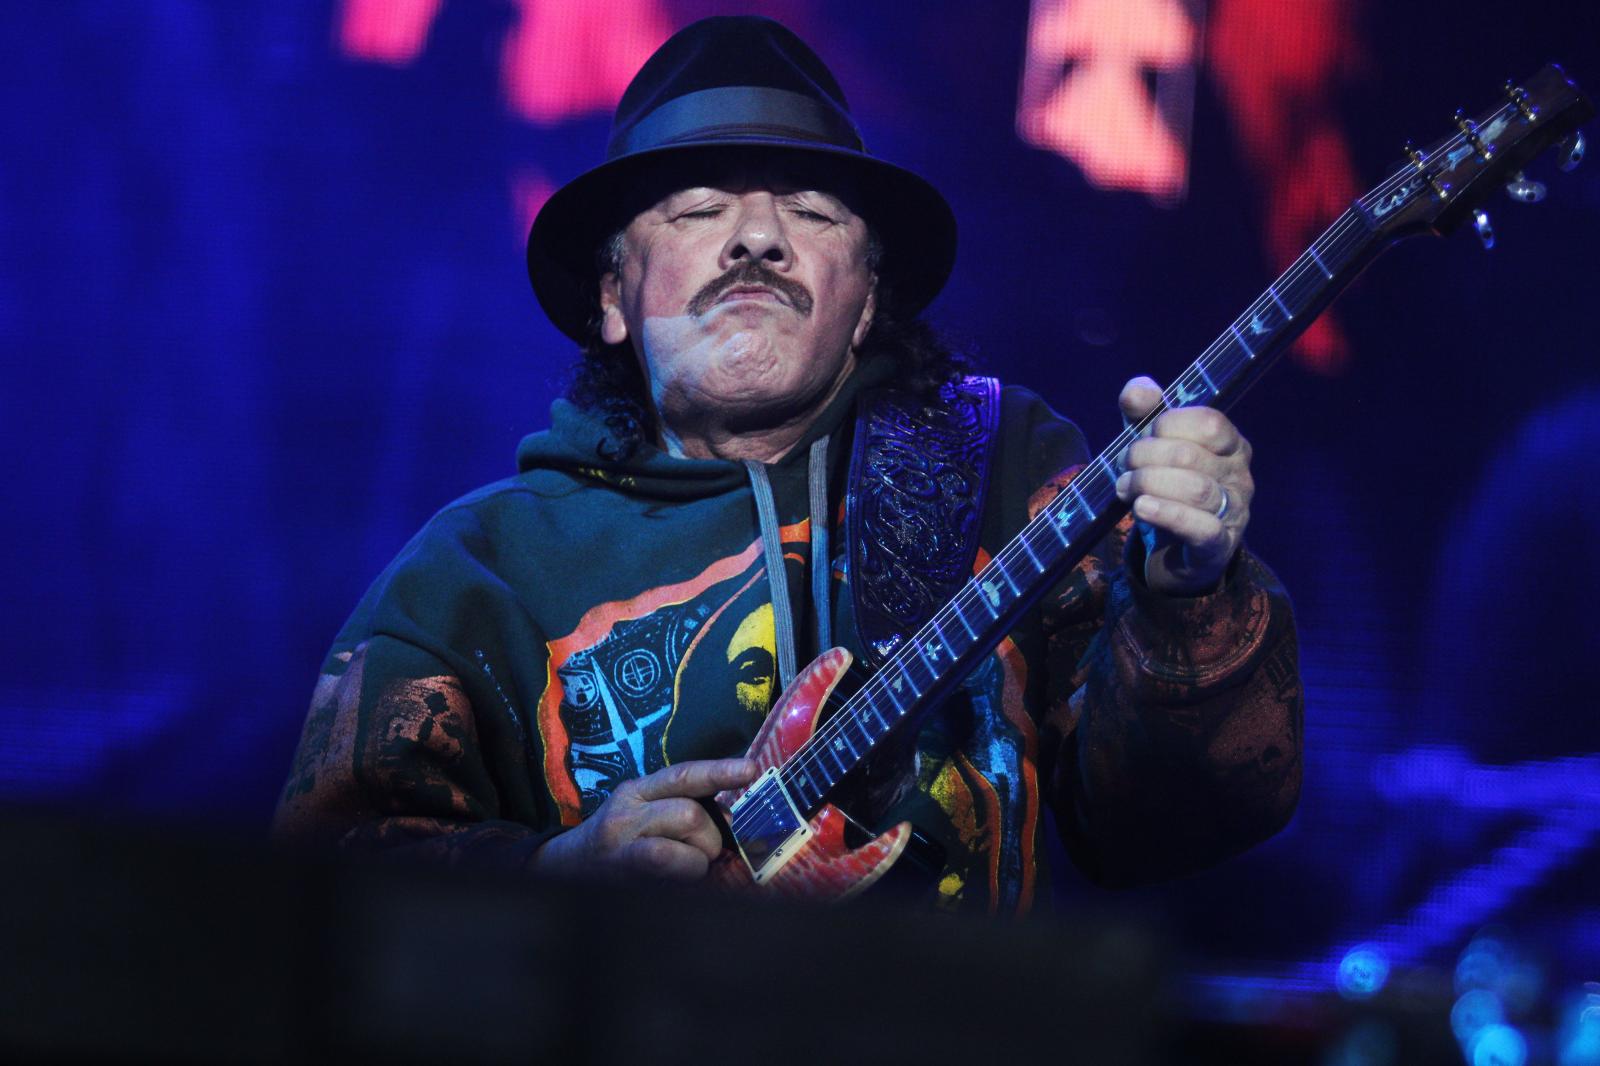 Image from Music Concert and Festivals - Carlos Santana on Cumbre Tajín Festival.